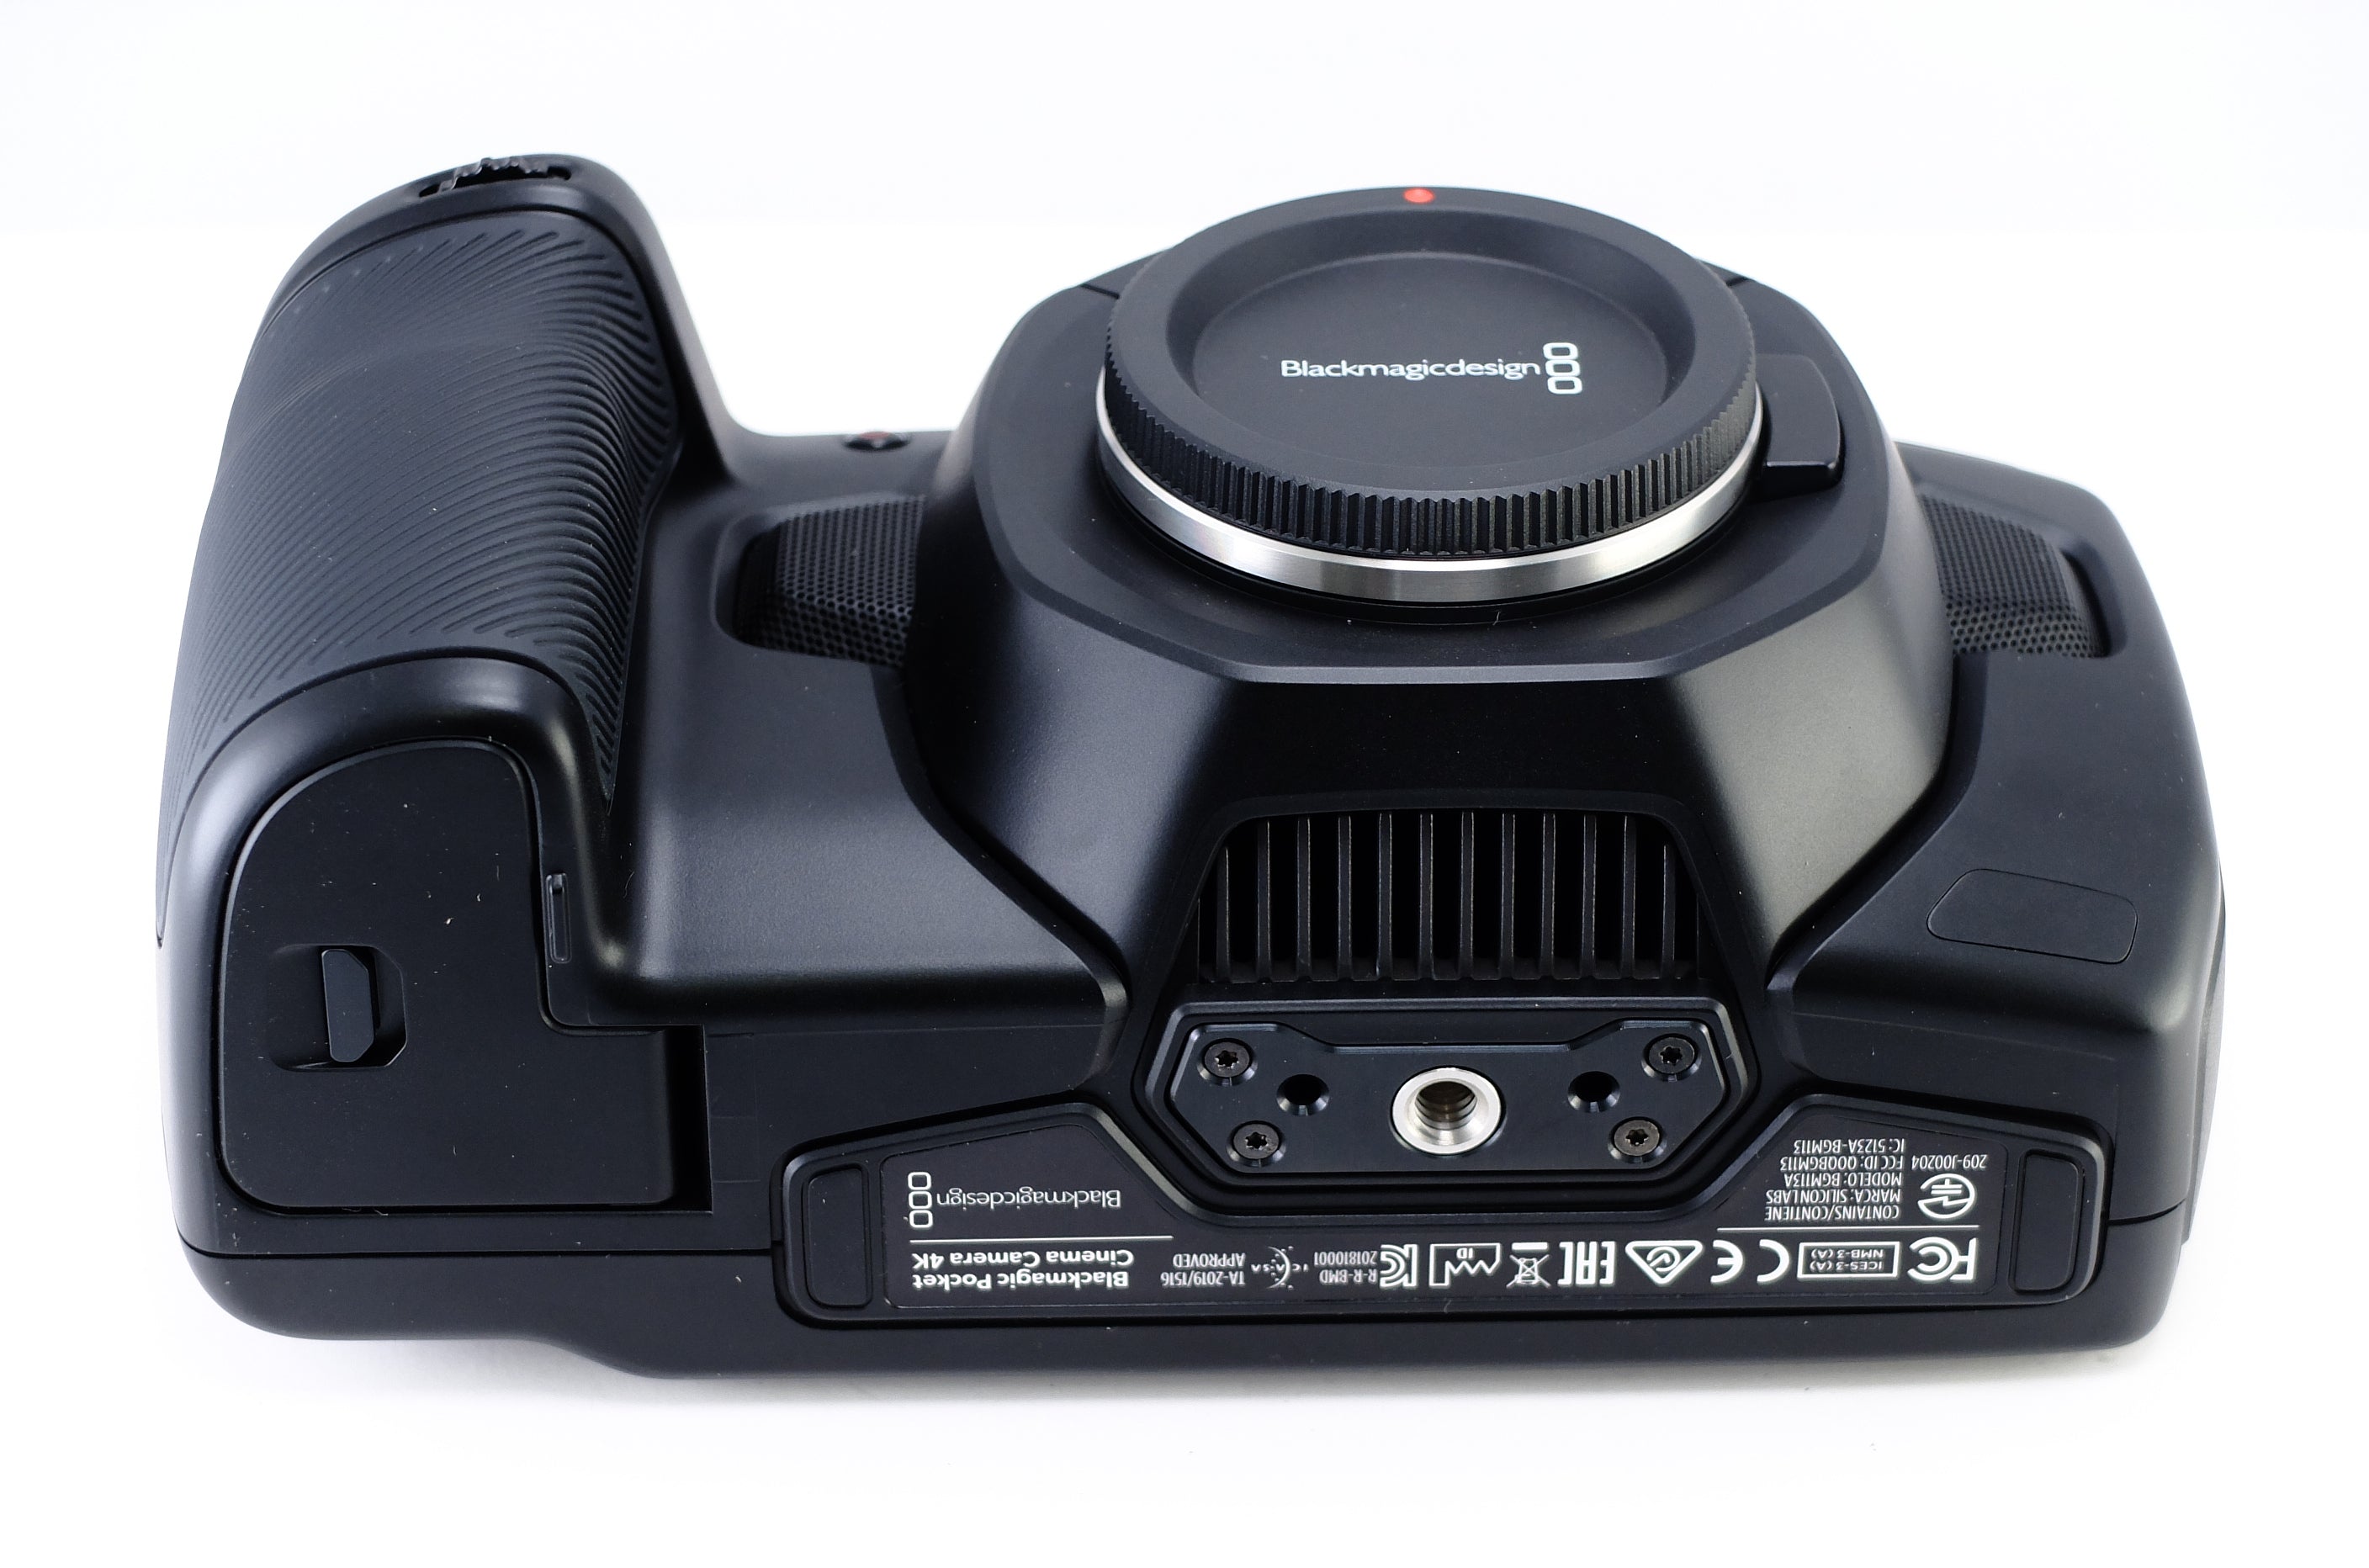 Blackmagicdesign】Blackmagic Pocket Cinema Camera 4K [マイクロ 